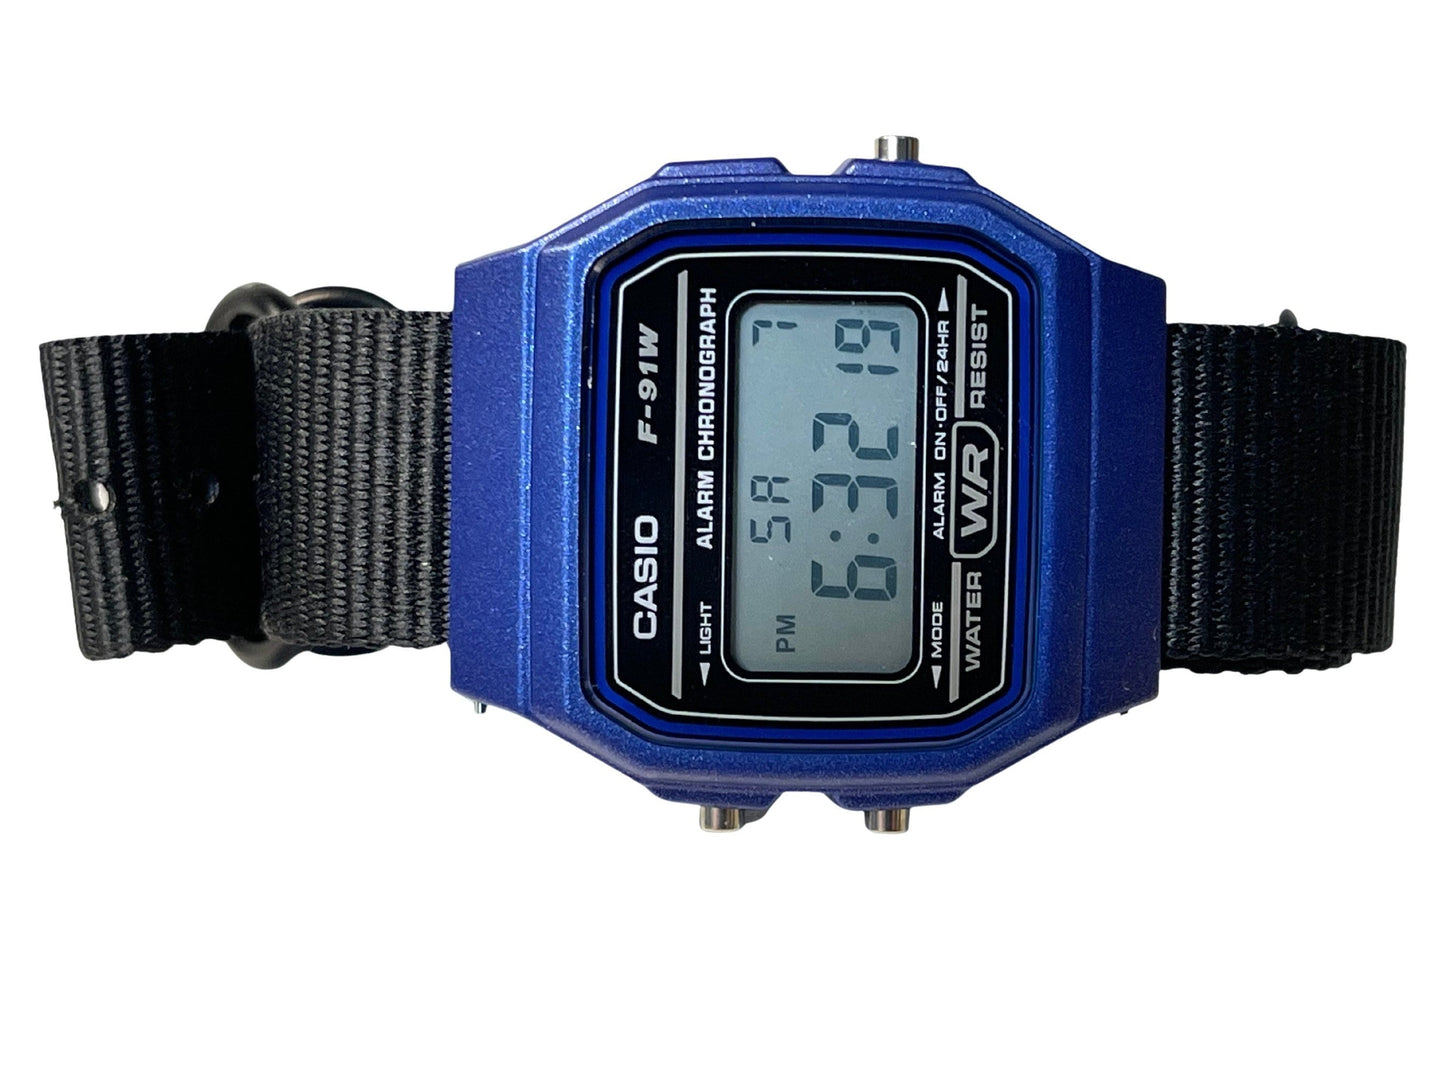 Custom Blue Casio Watch on Black Strap w/ black hardware